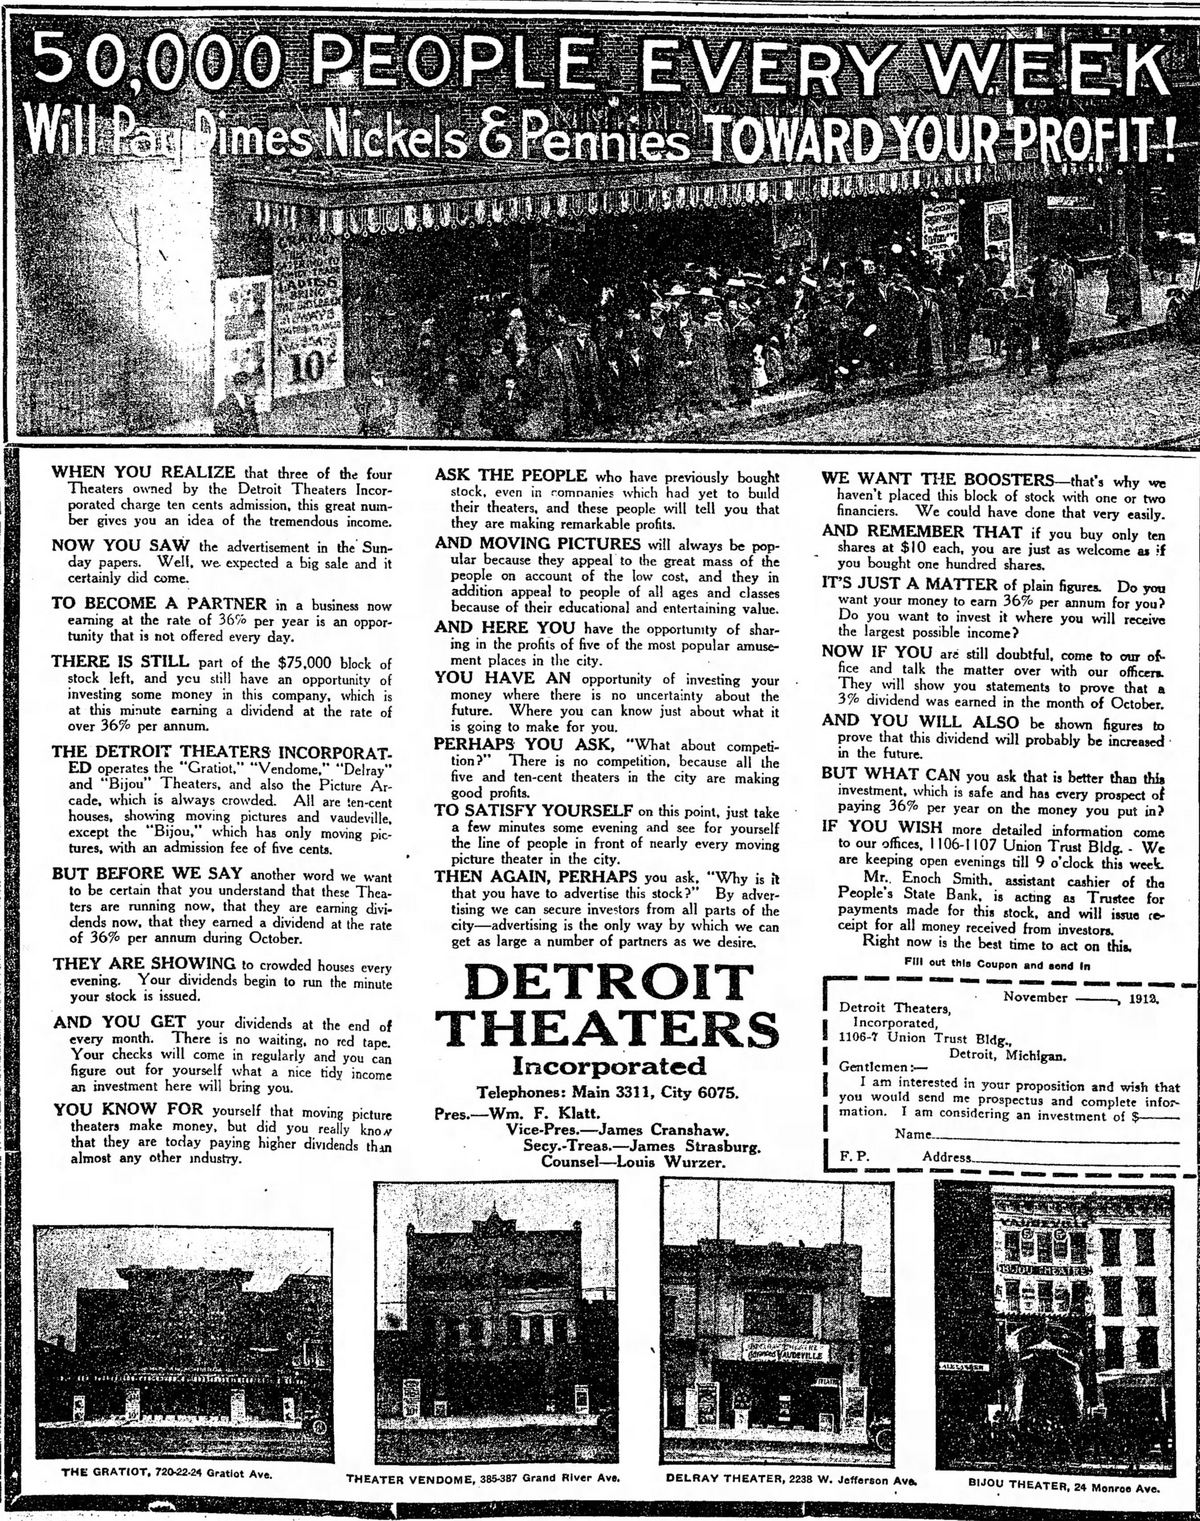 Delray Theatre - November 1912 Ad (newer photo)